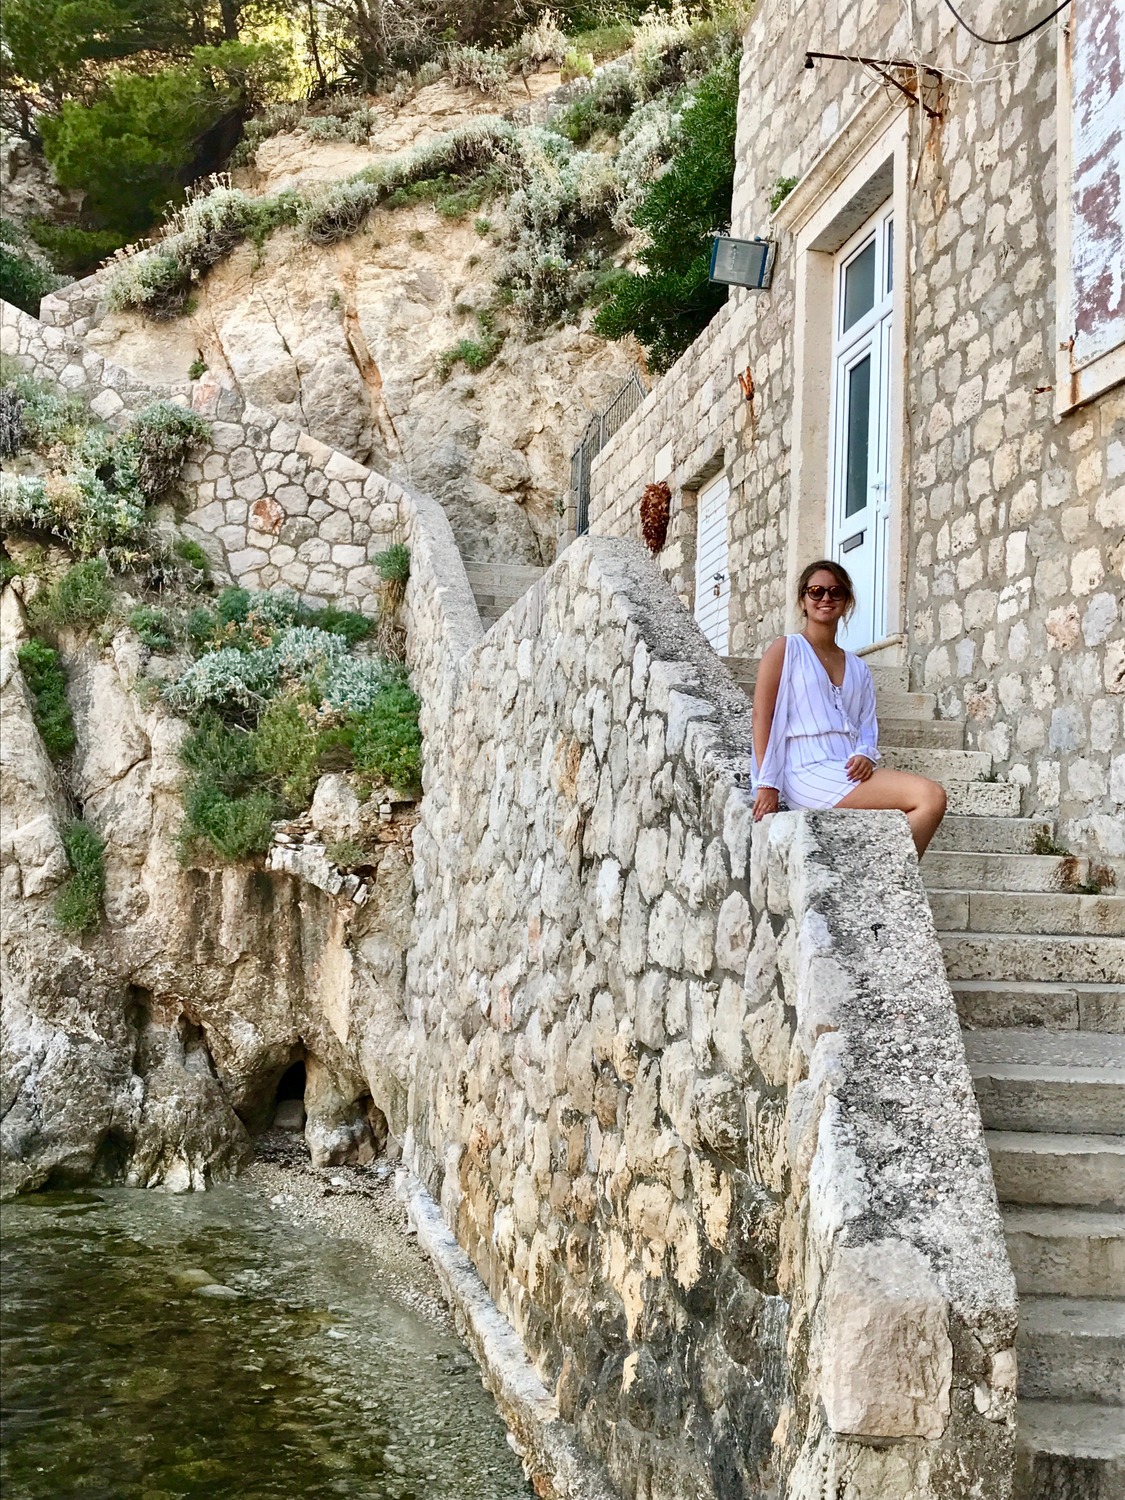 A Luxury Tour of Croatia with Eva LaRue (Part 1)